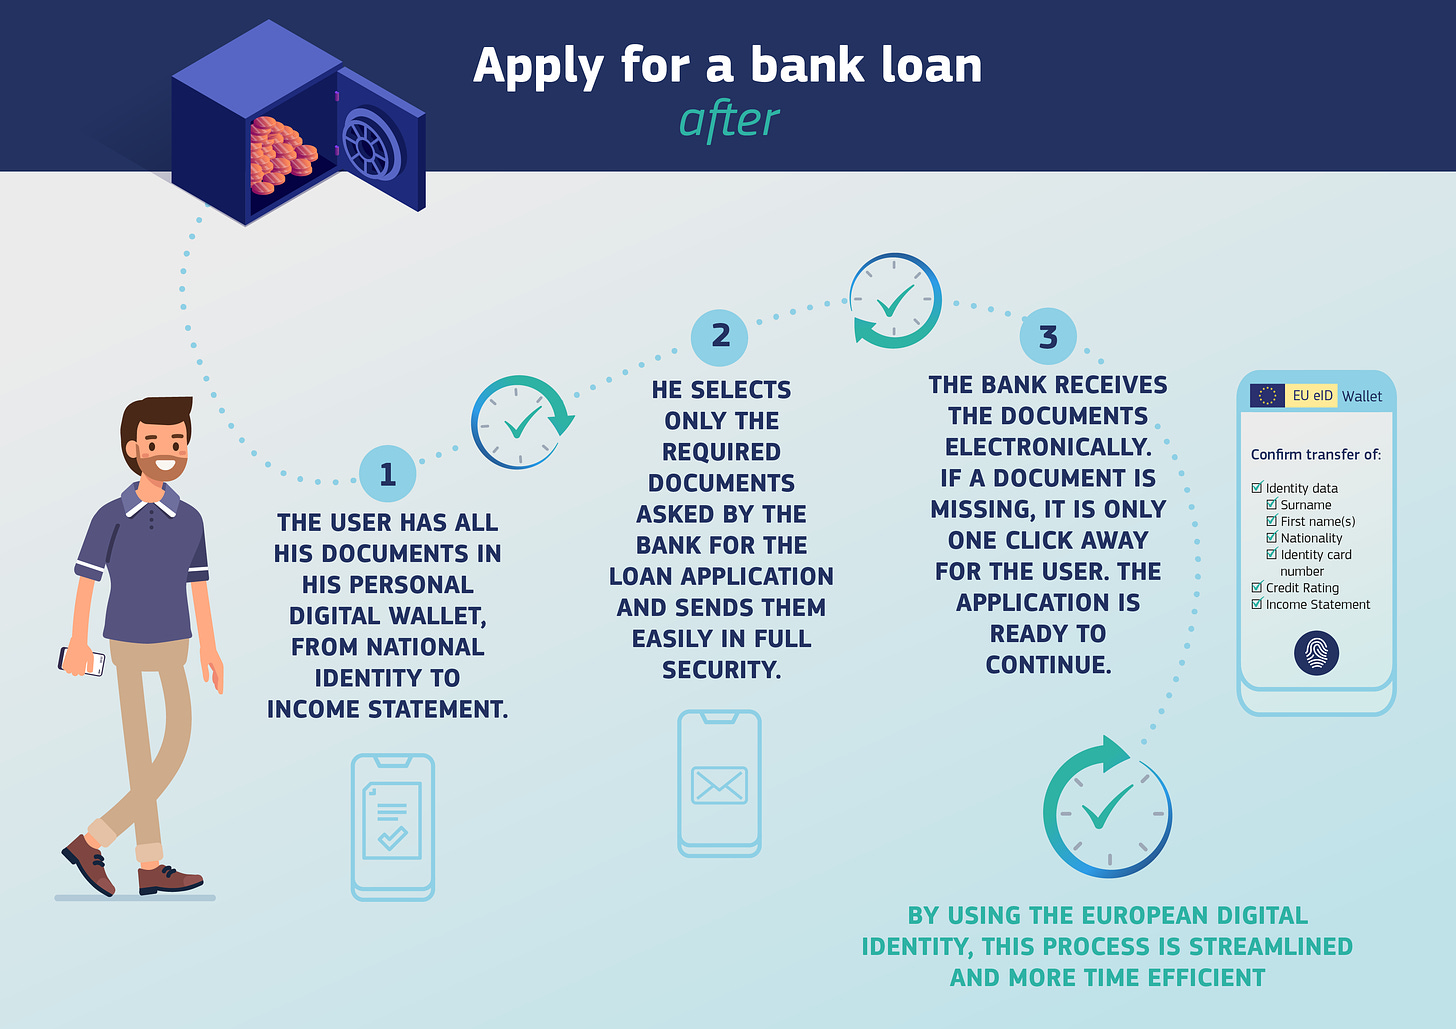 Bank loan request using European digital identity